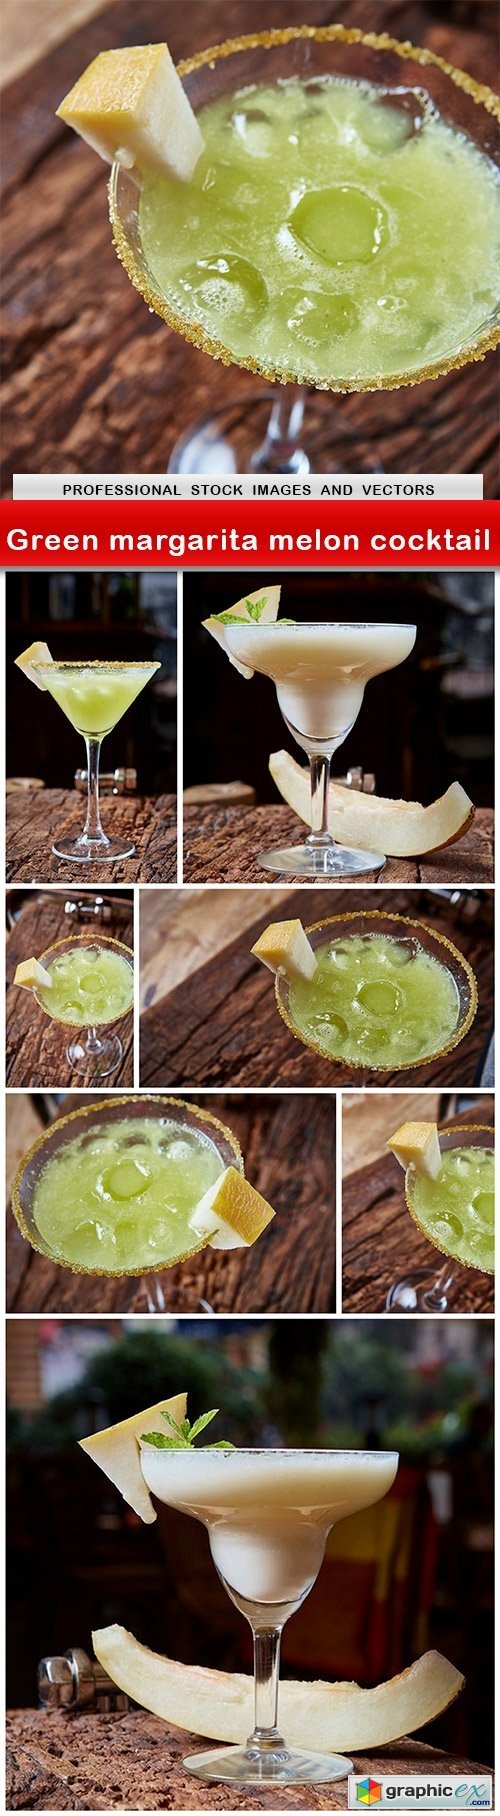 Green margarita melon cocktail - 8 UHQ JPEG